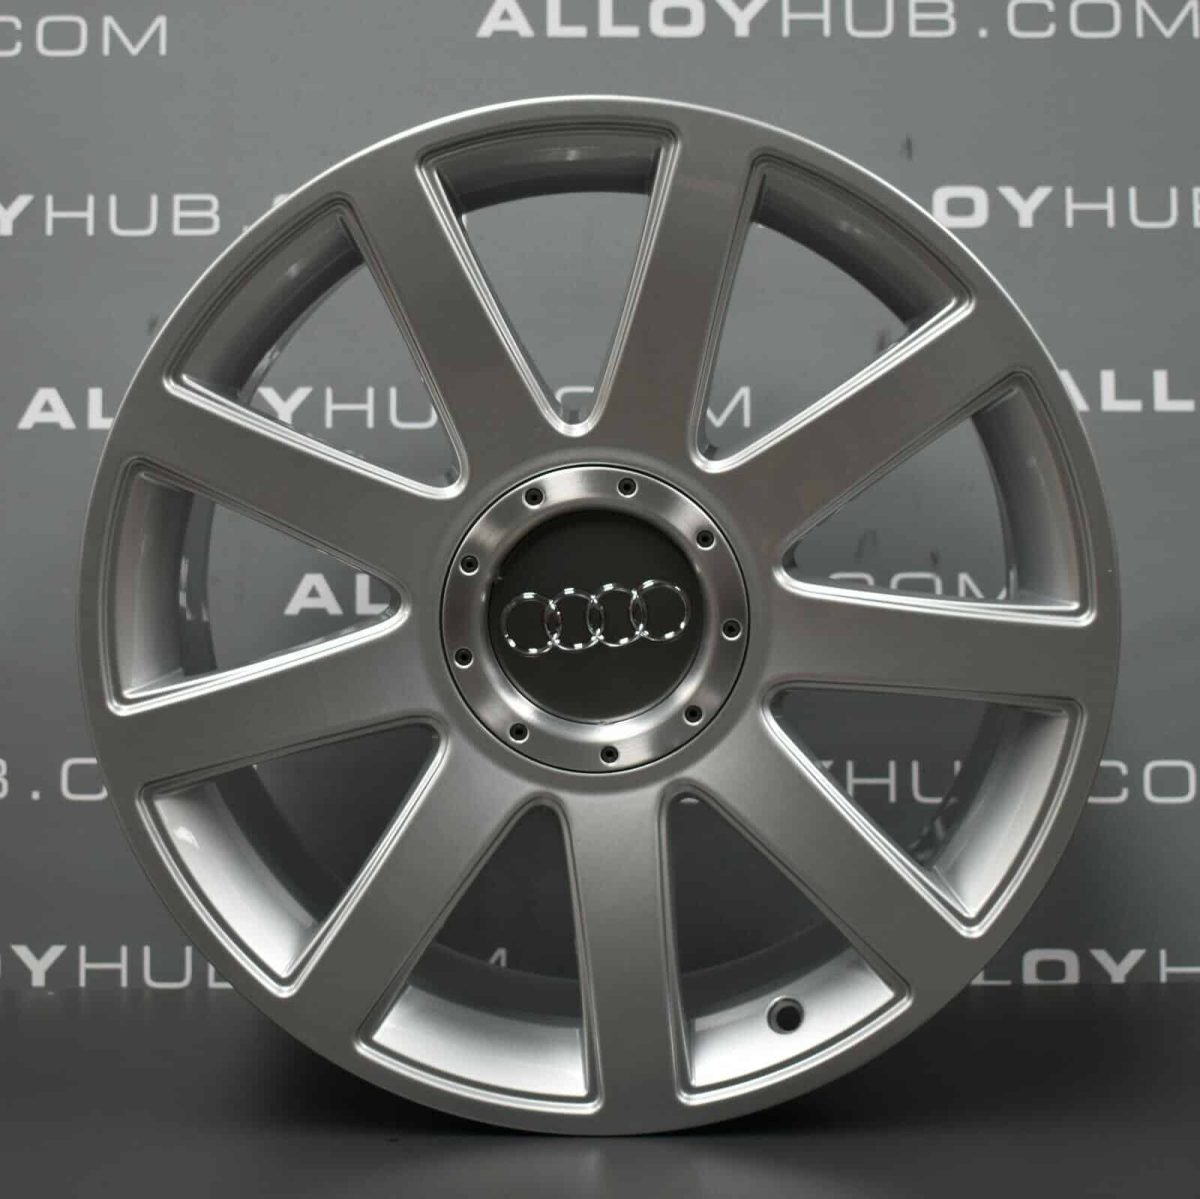 Genuine Audi TT 8N MK1 9 Spoke Ronal 18" Inch Alloy Wheel with Silver Finish 8N0 601 025 S